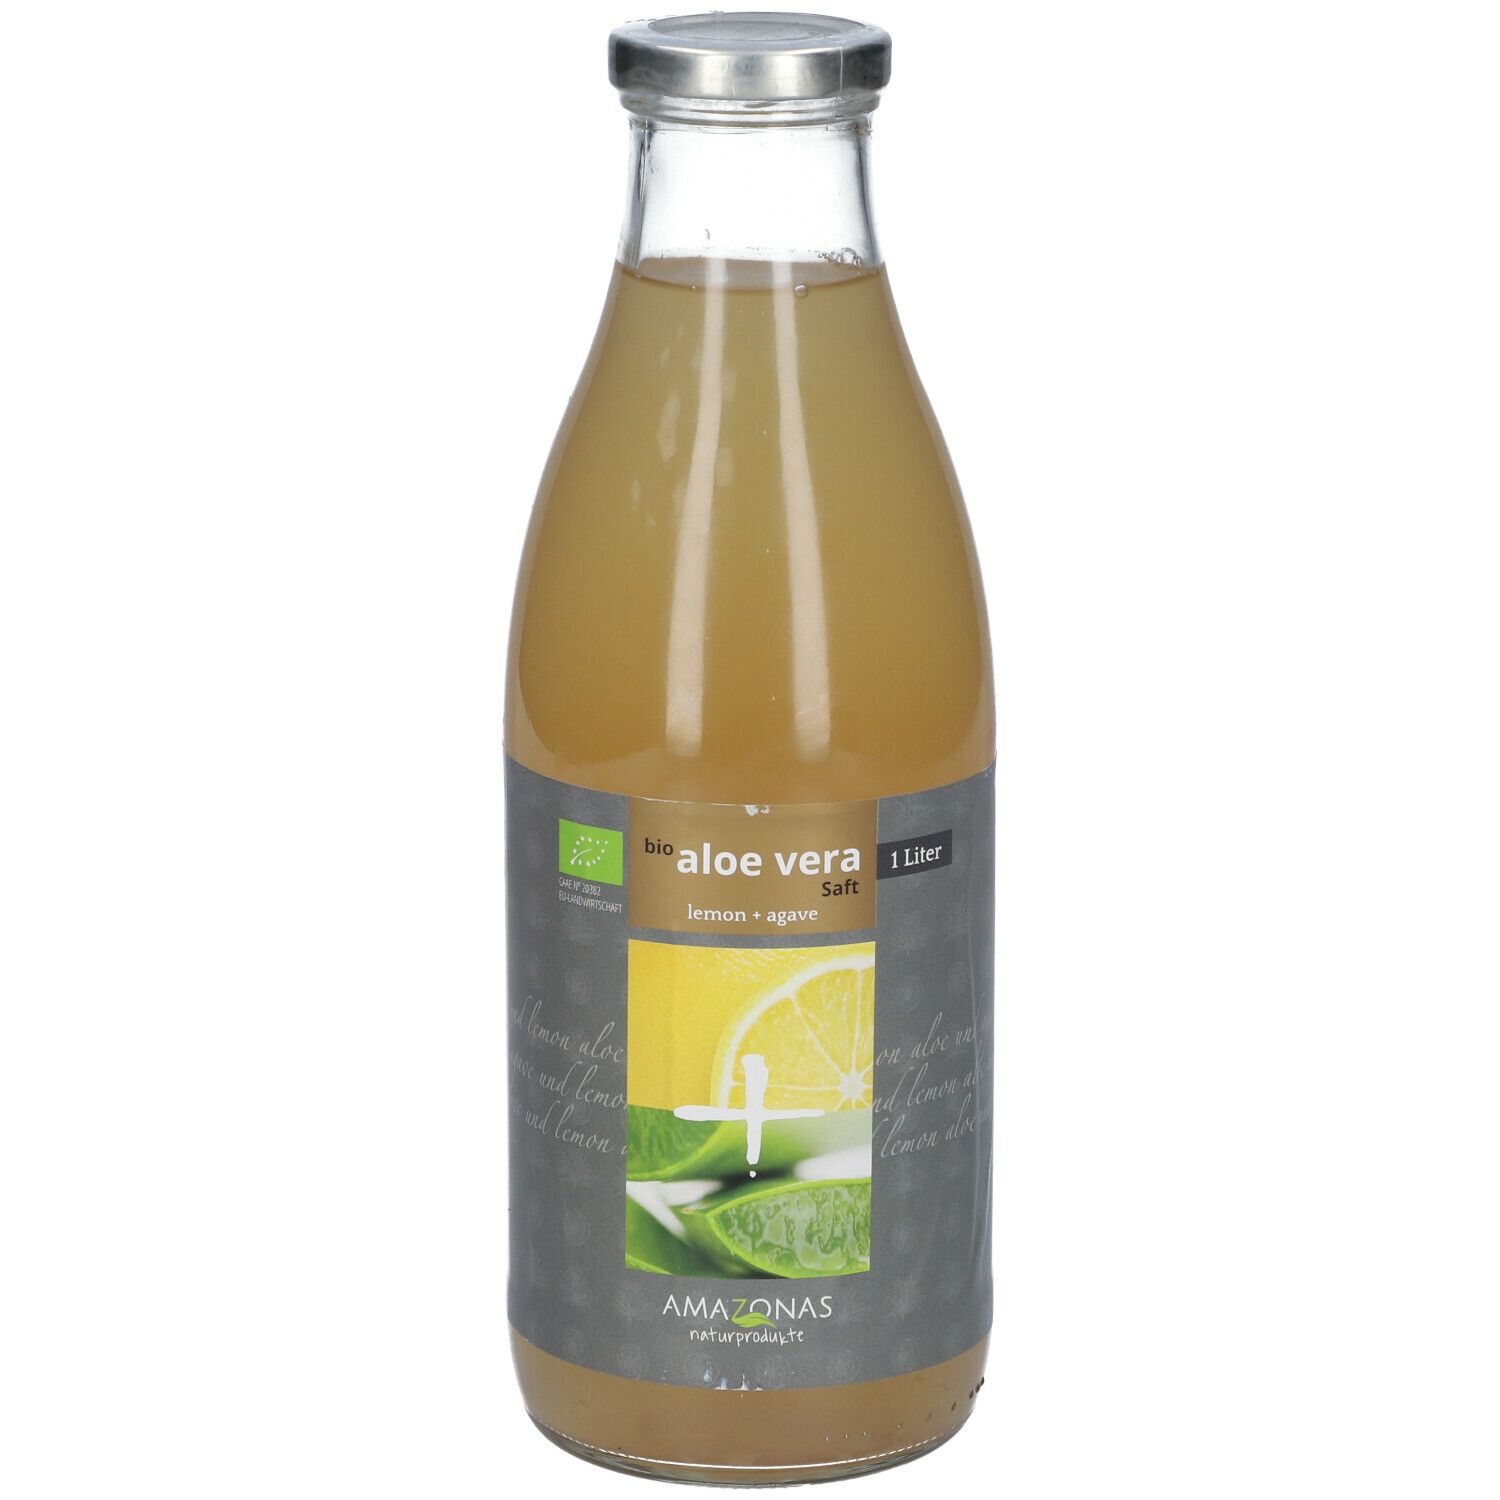 AMAZONAS Naturprodukte Handels GmbH BIO Aloe Vera Saft Lemon + Agave